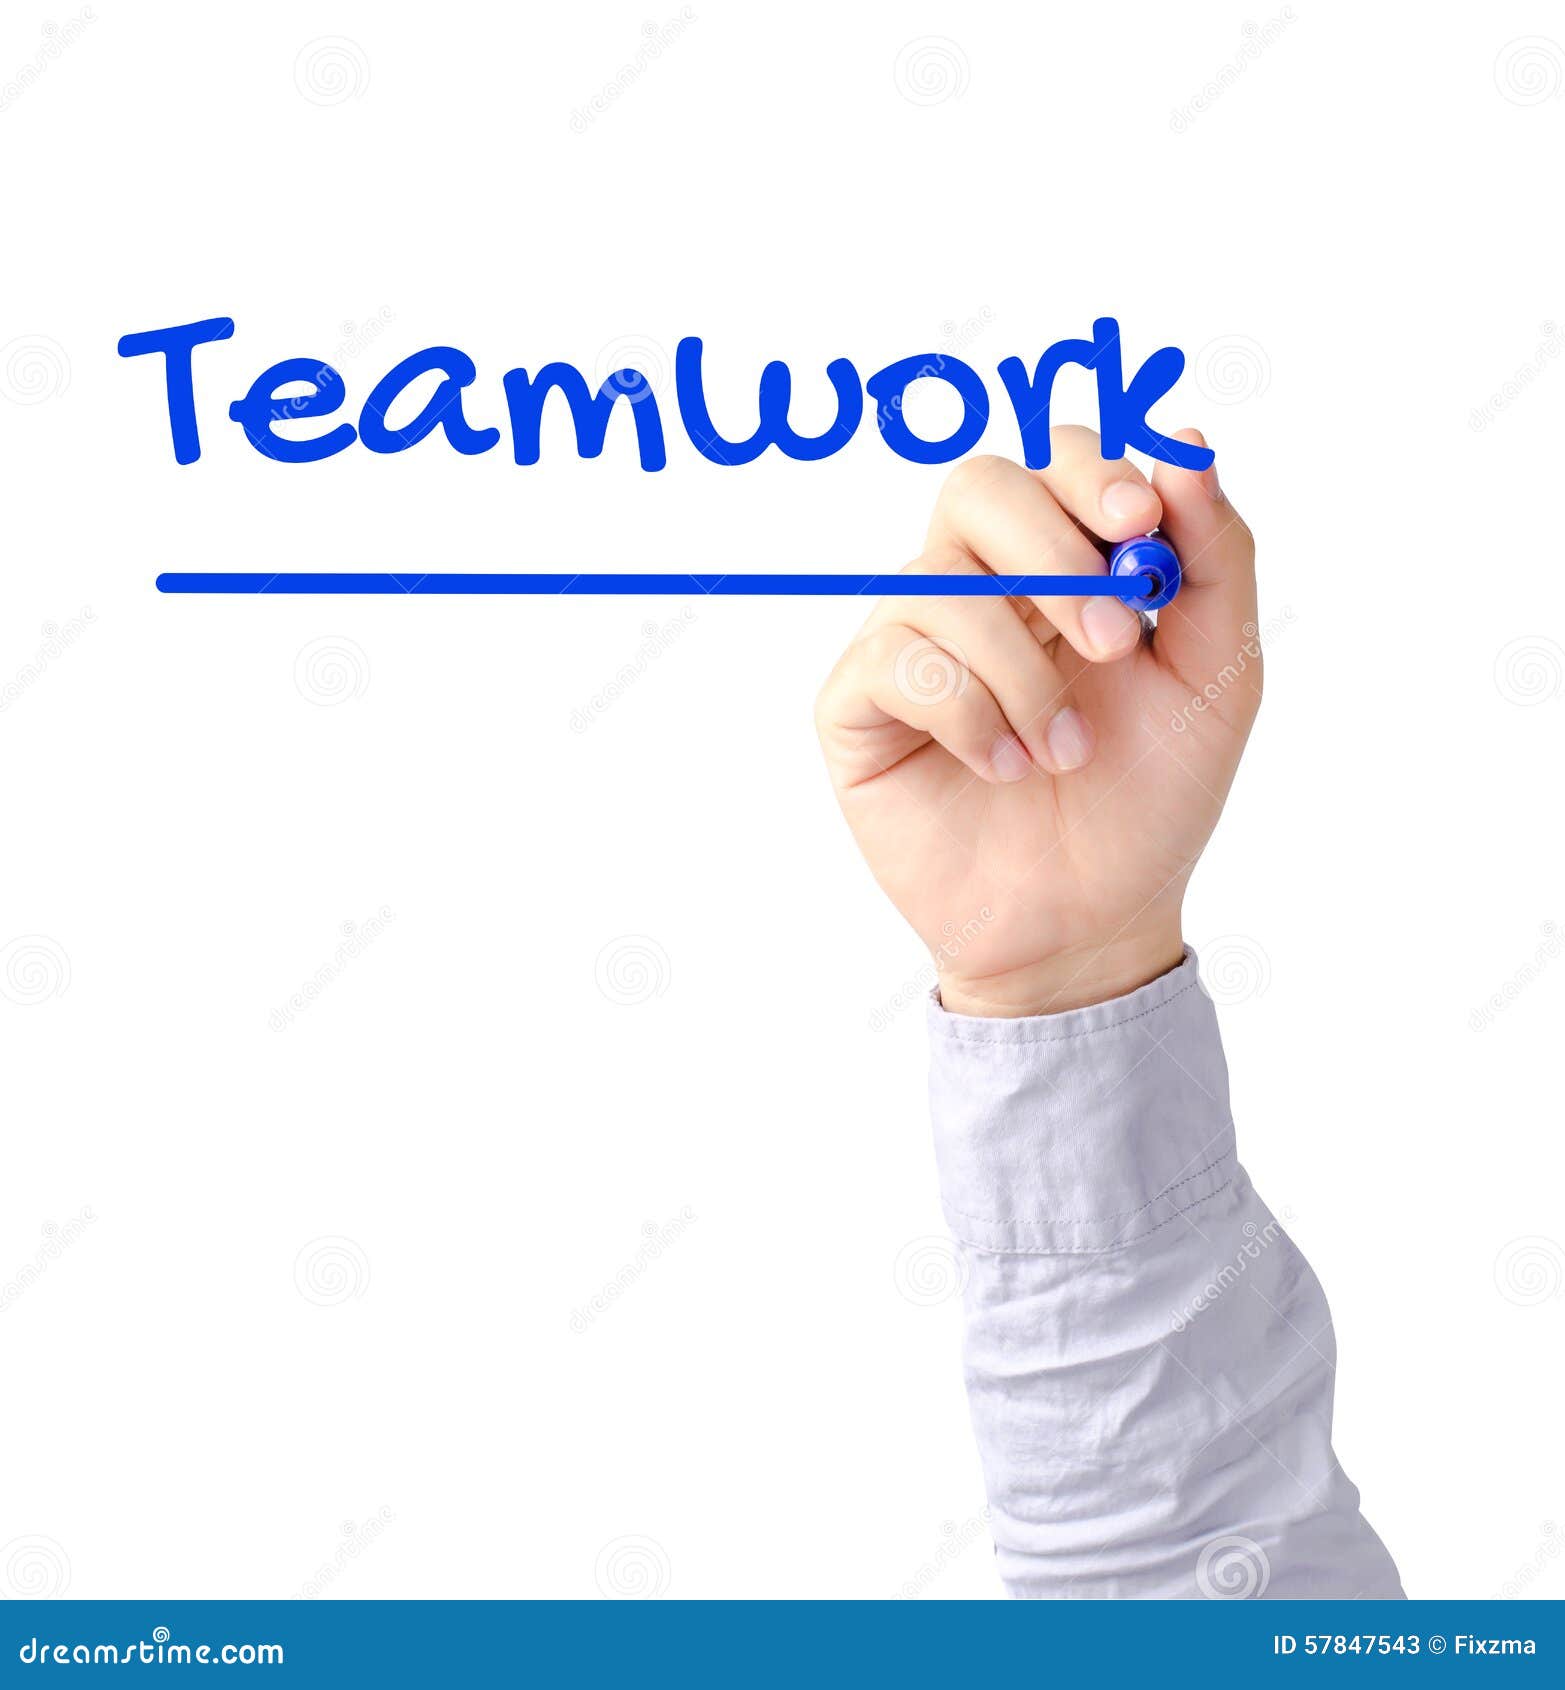 Essay about teamwork